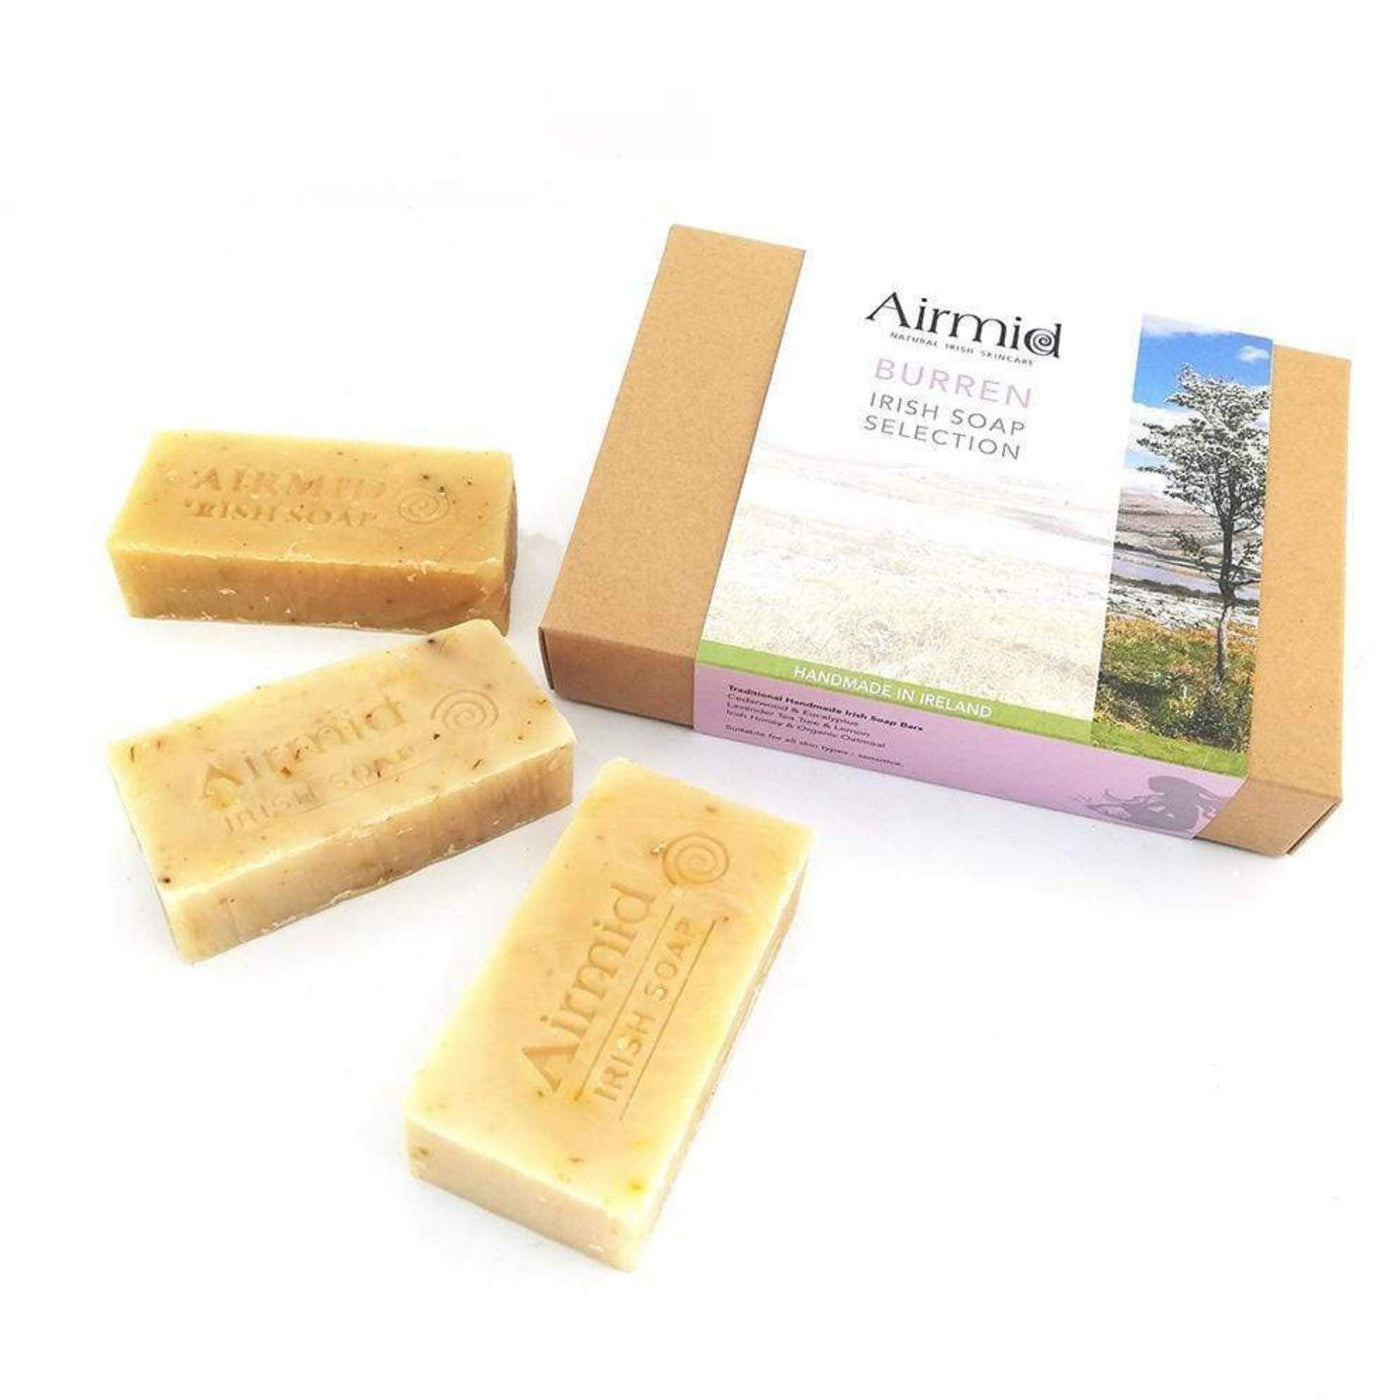 Airmid Soap Handmade Burren Soap Collection - Airmid